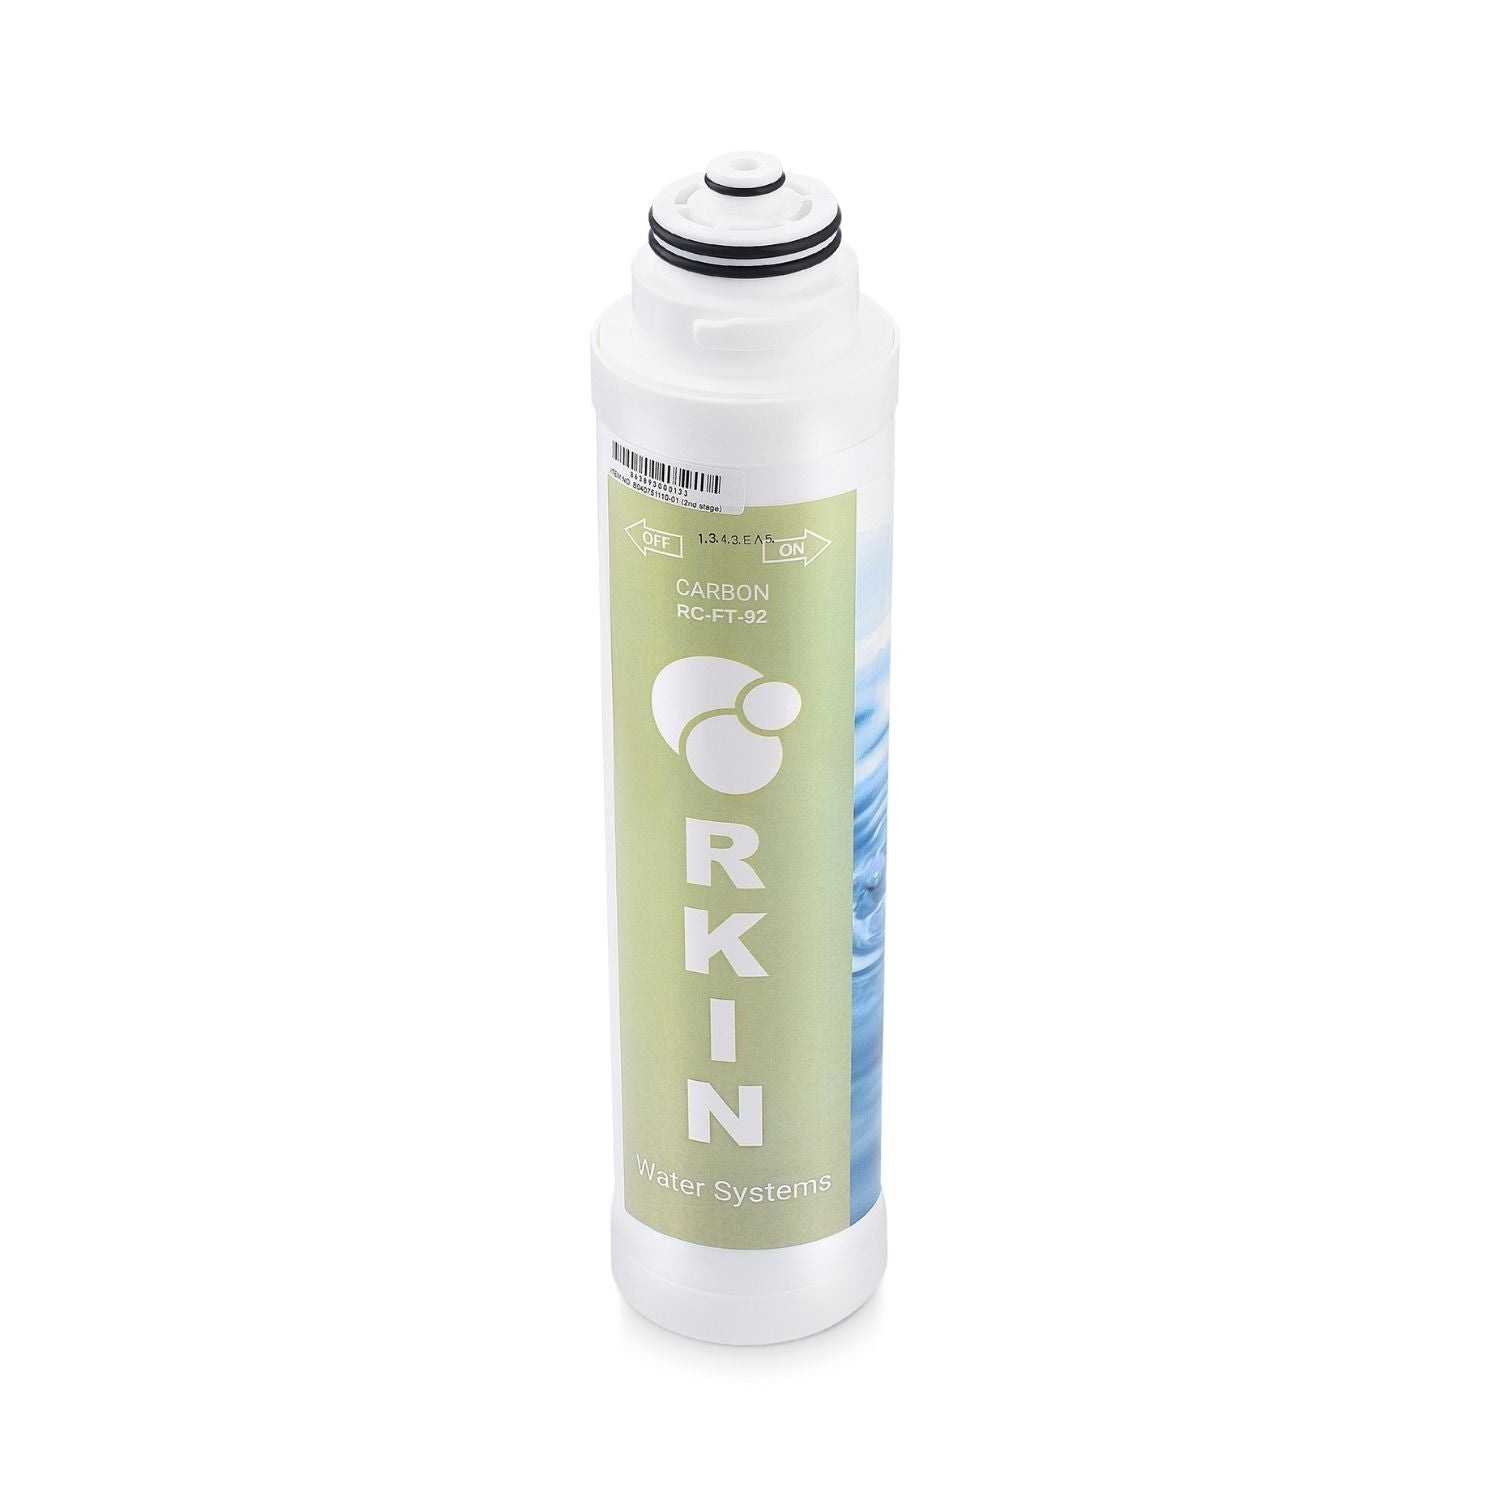 RKIN Carbon Block Filter